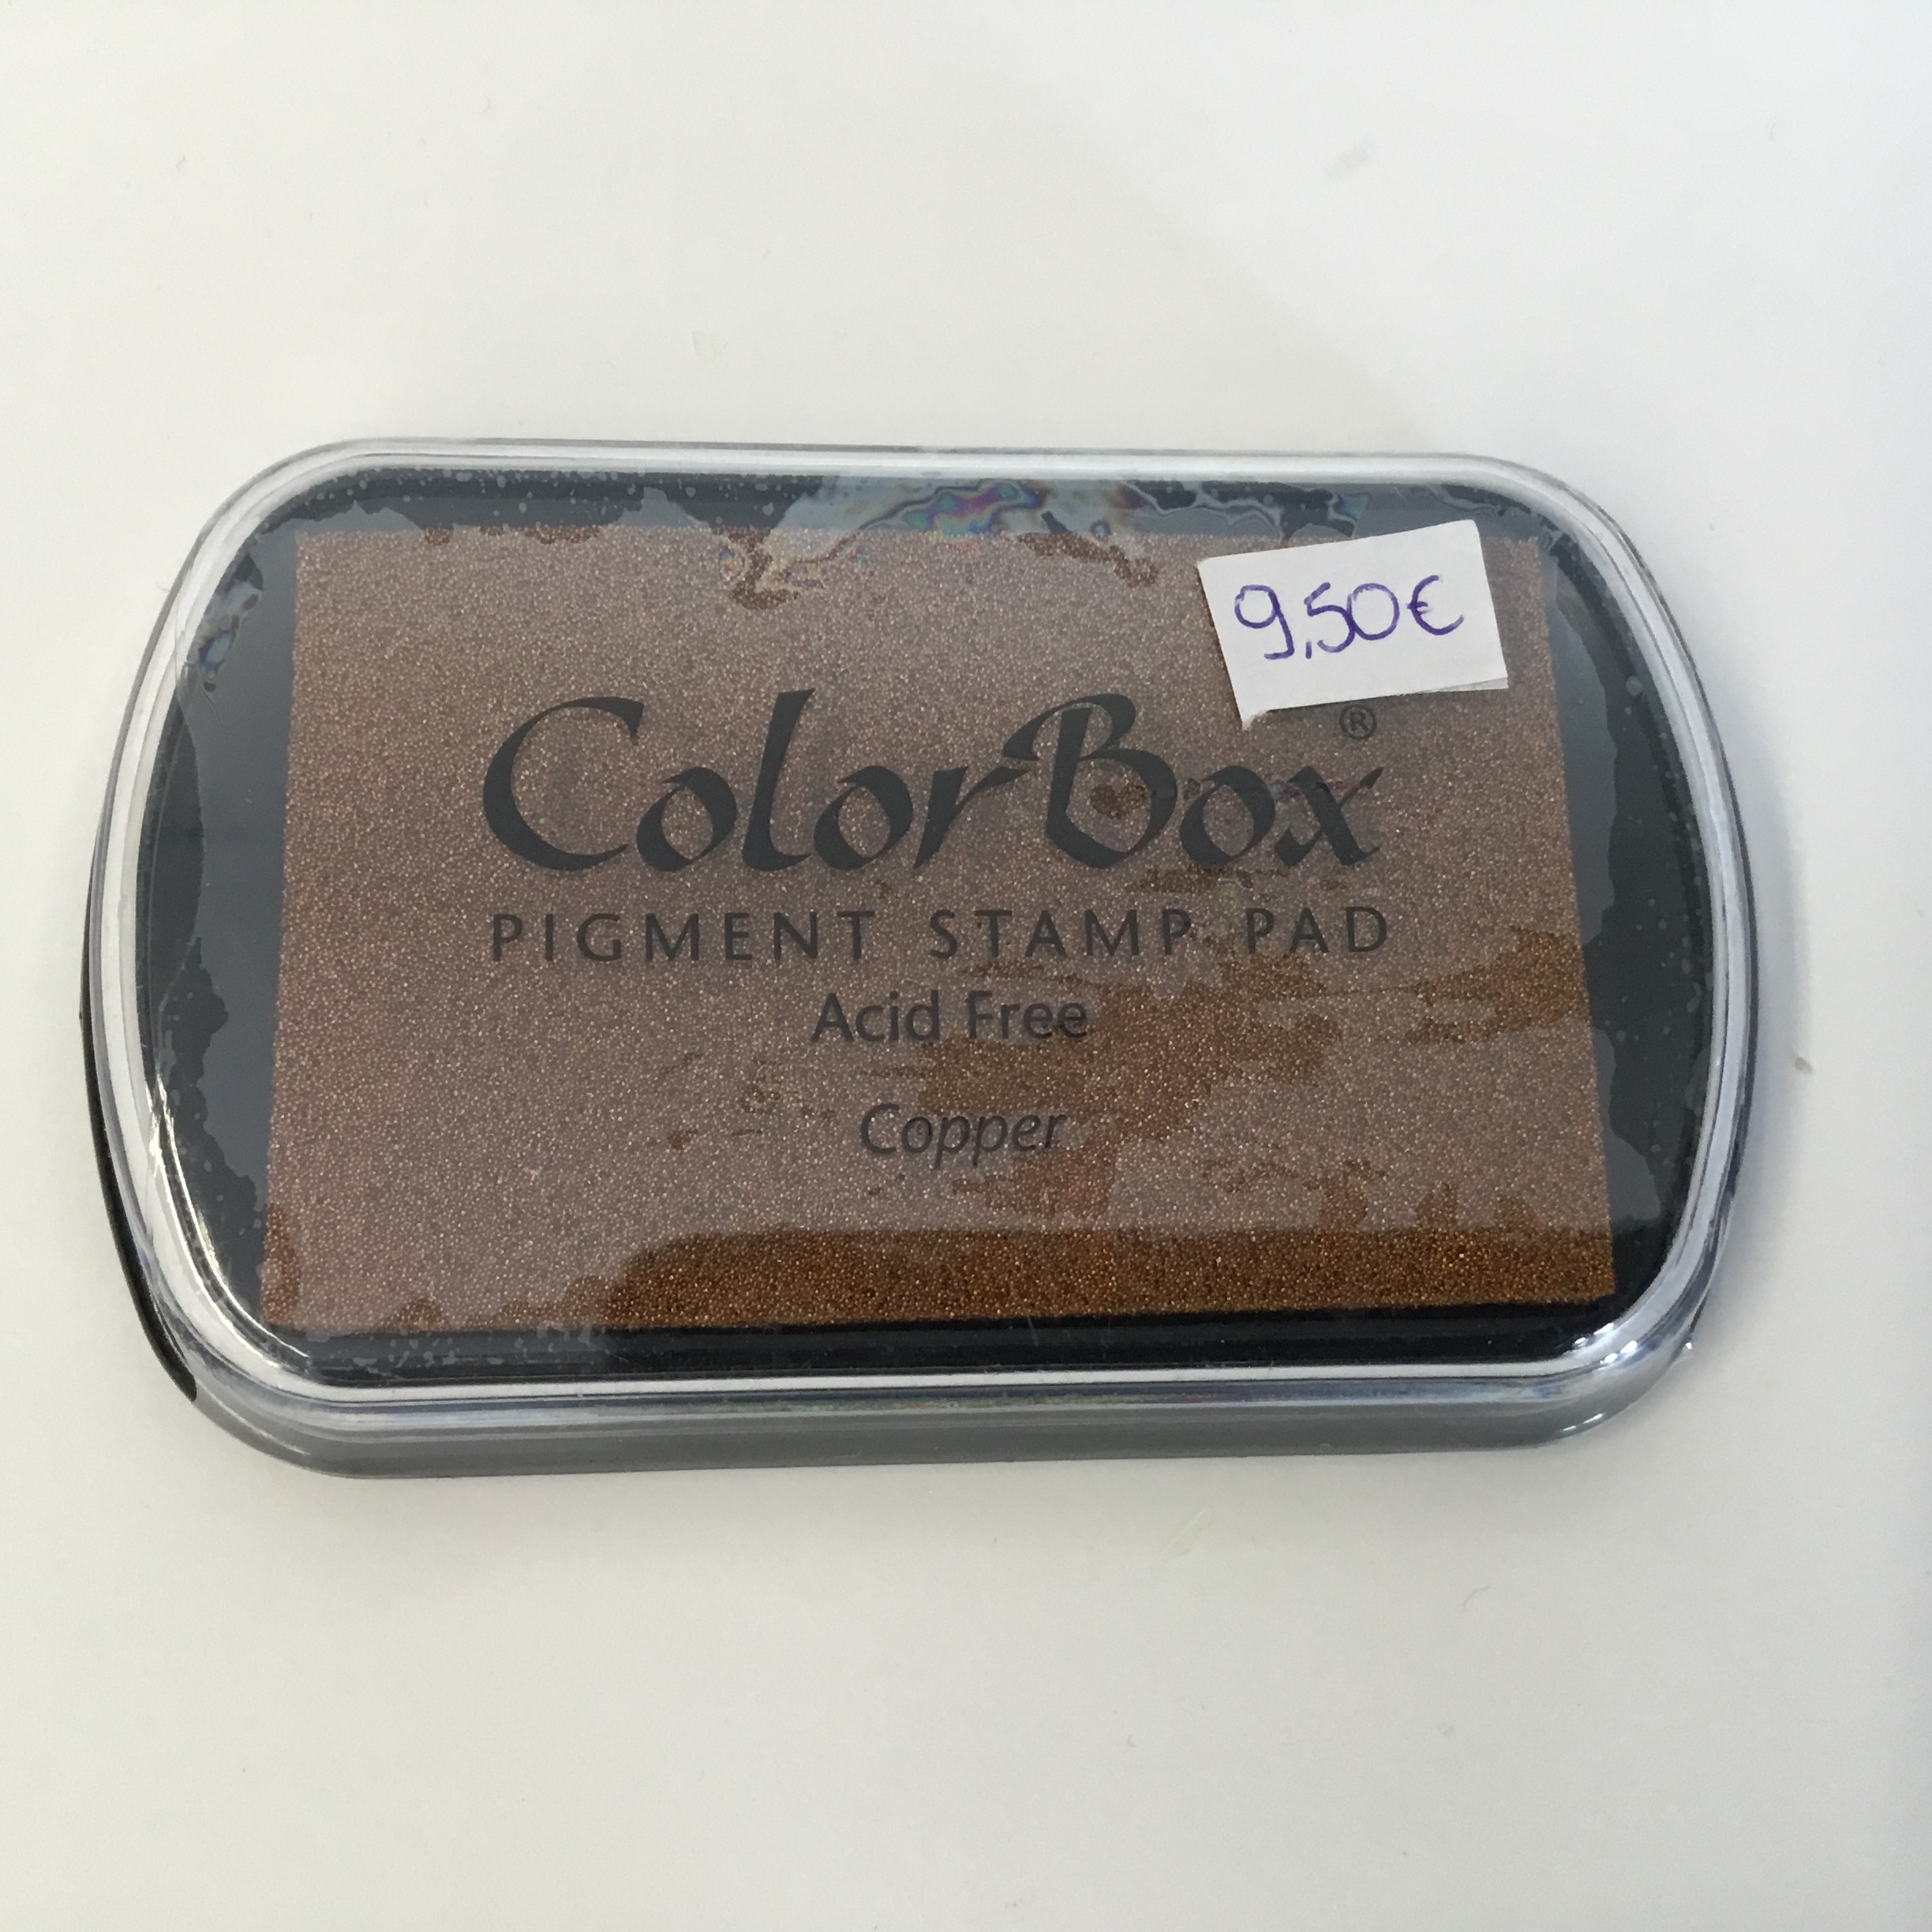 Verder Sneeuwwitje wit Colorbox: pigment stempel kussen copper – Oleastre